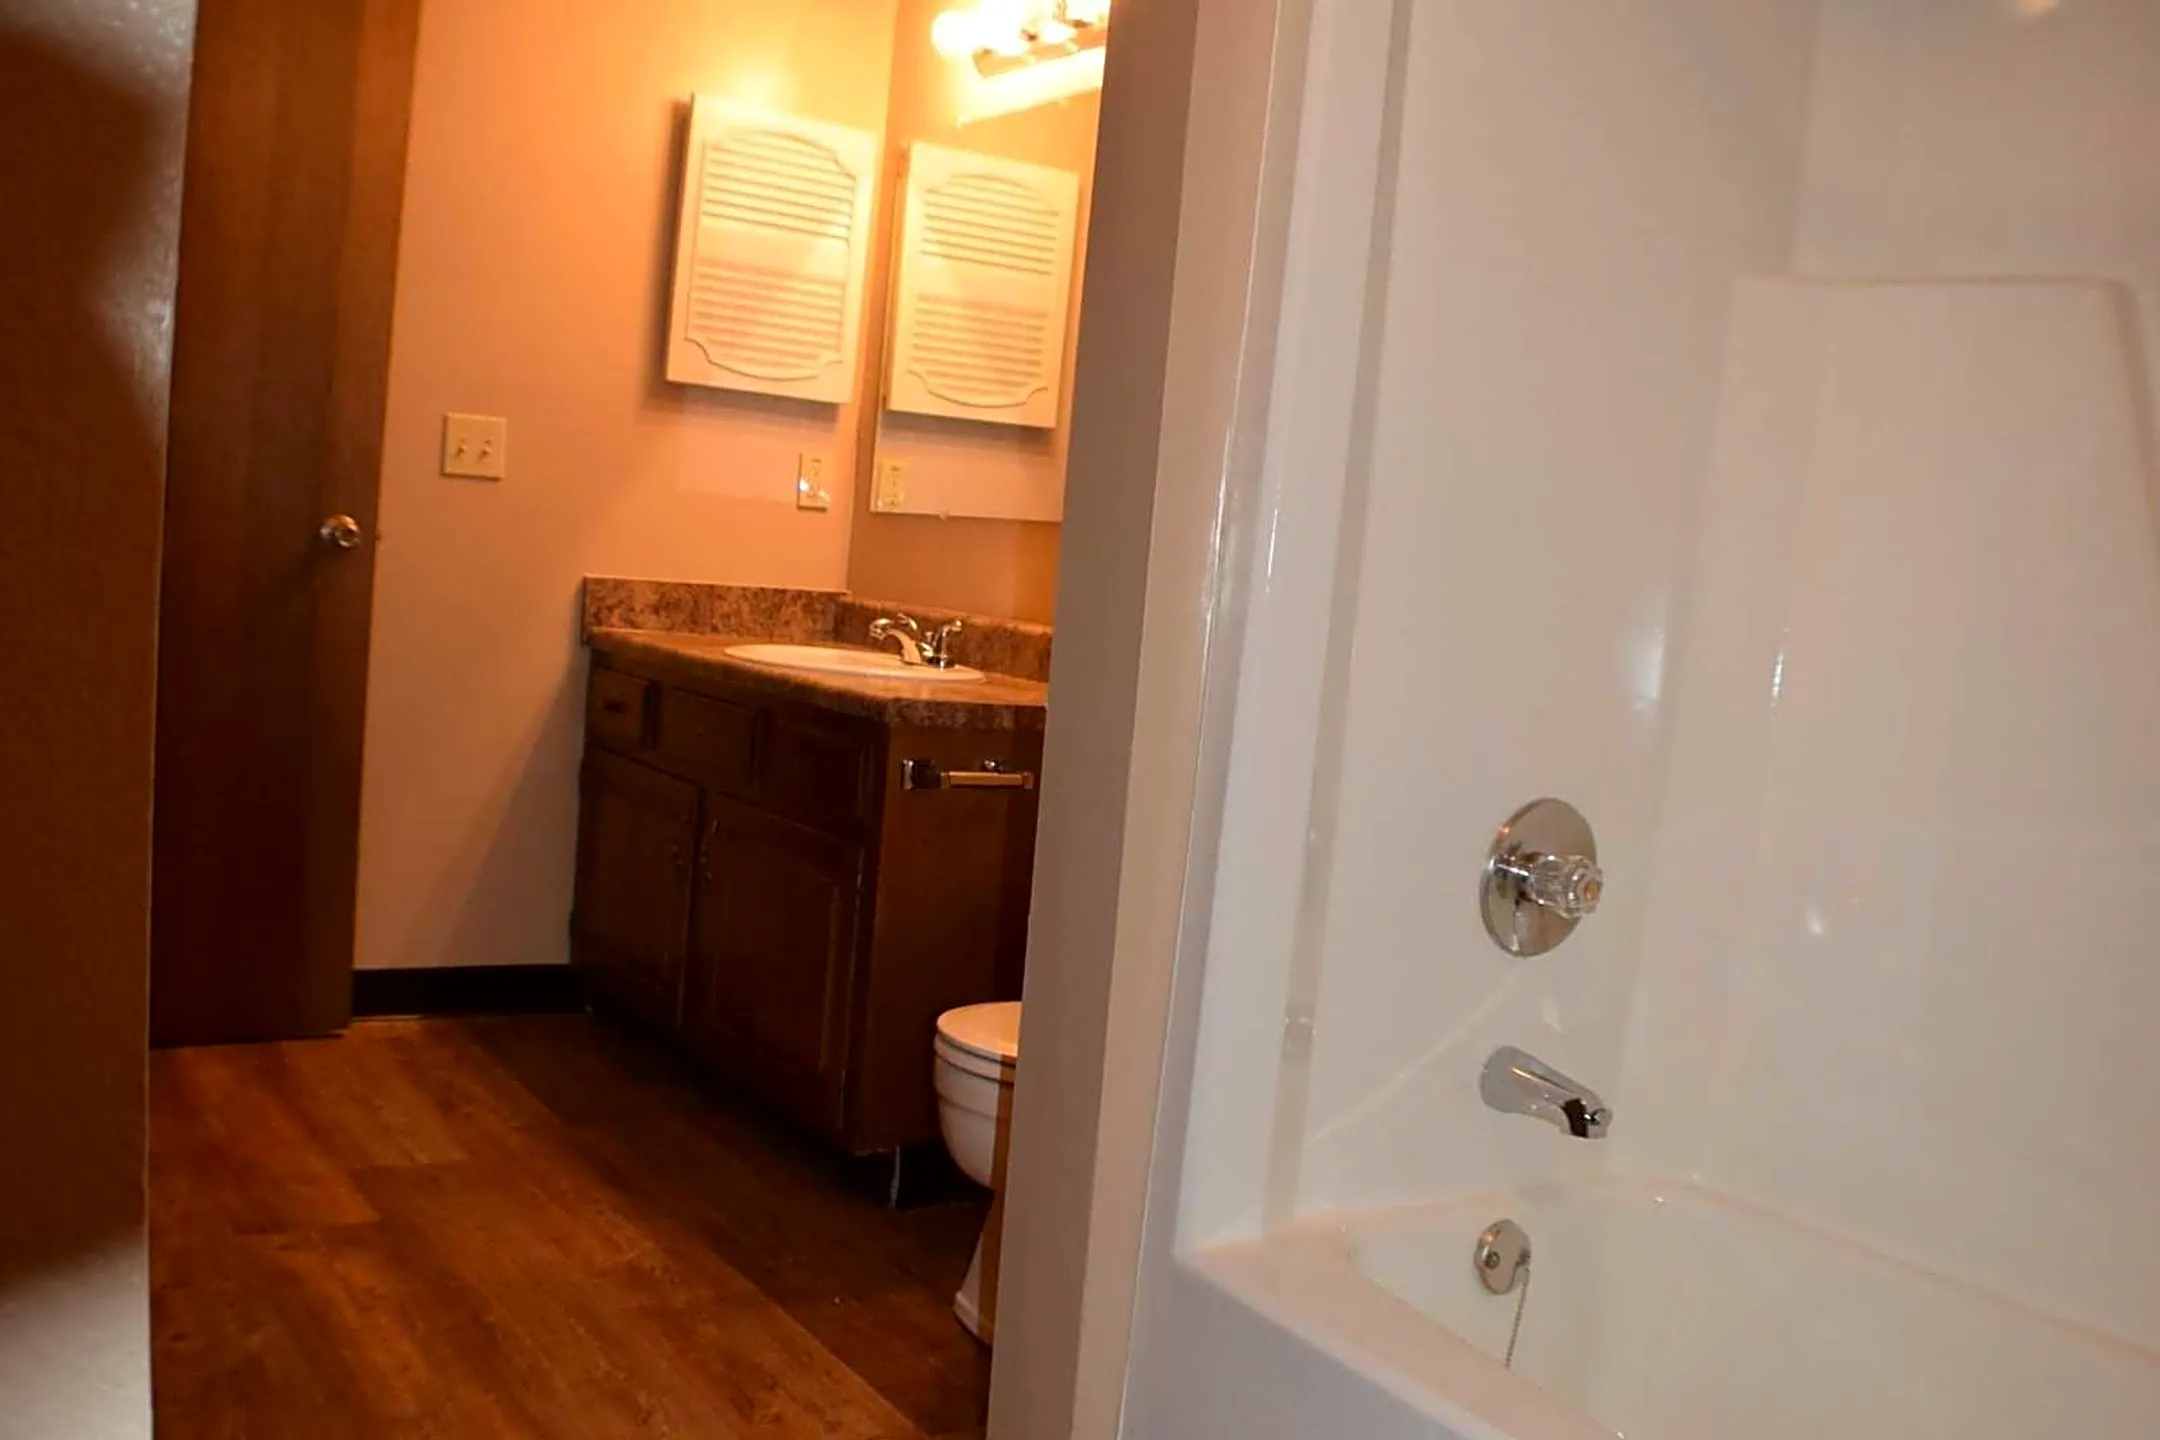 Bathroom - The Aragon Apartments - Wichita, KS